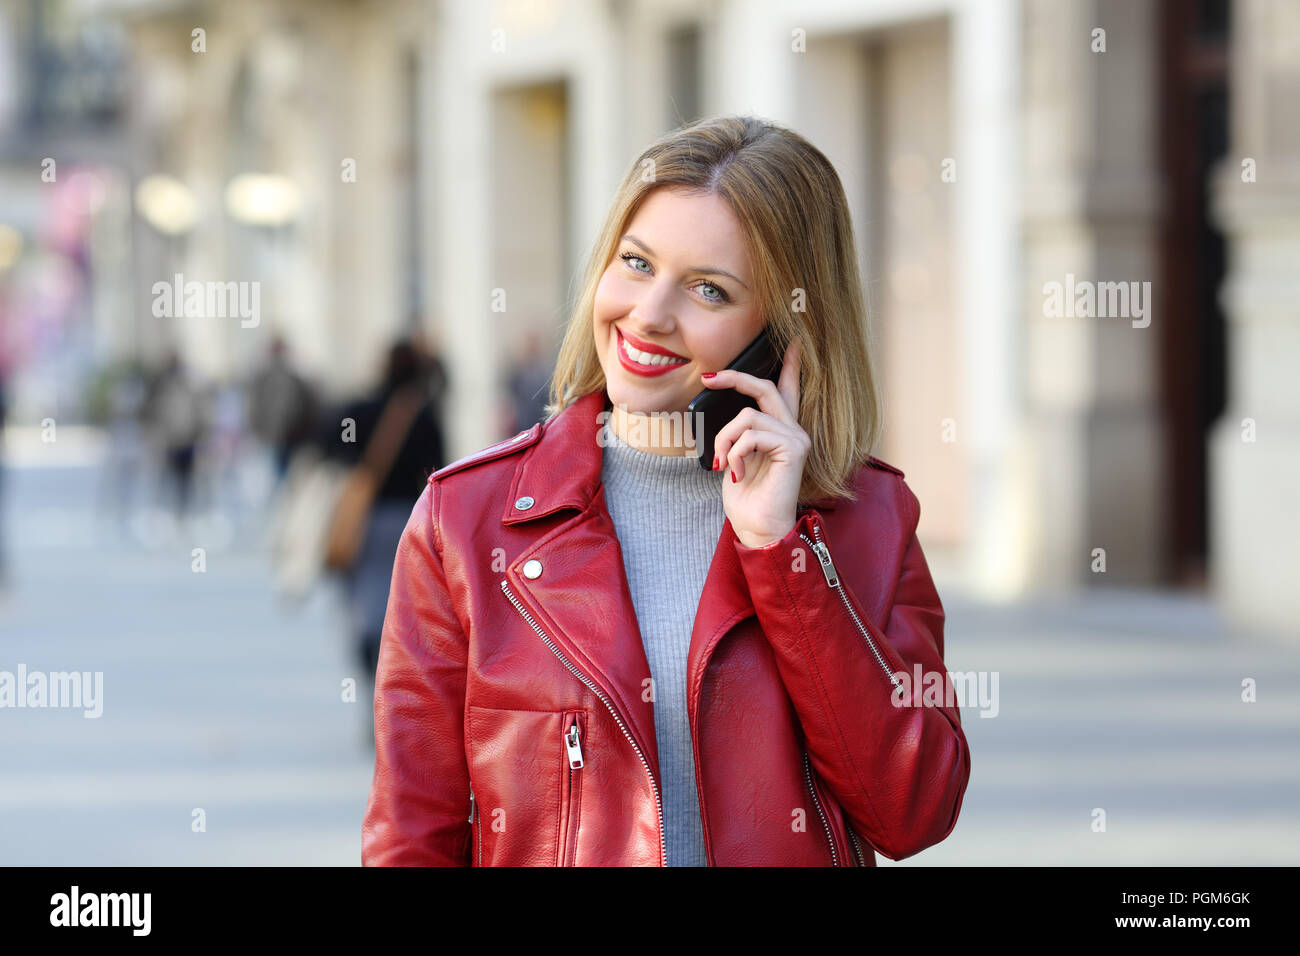 Fashion woman looking at camera phone marche dans la rue Banque D'Images